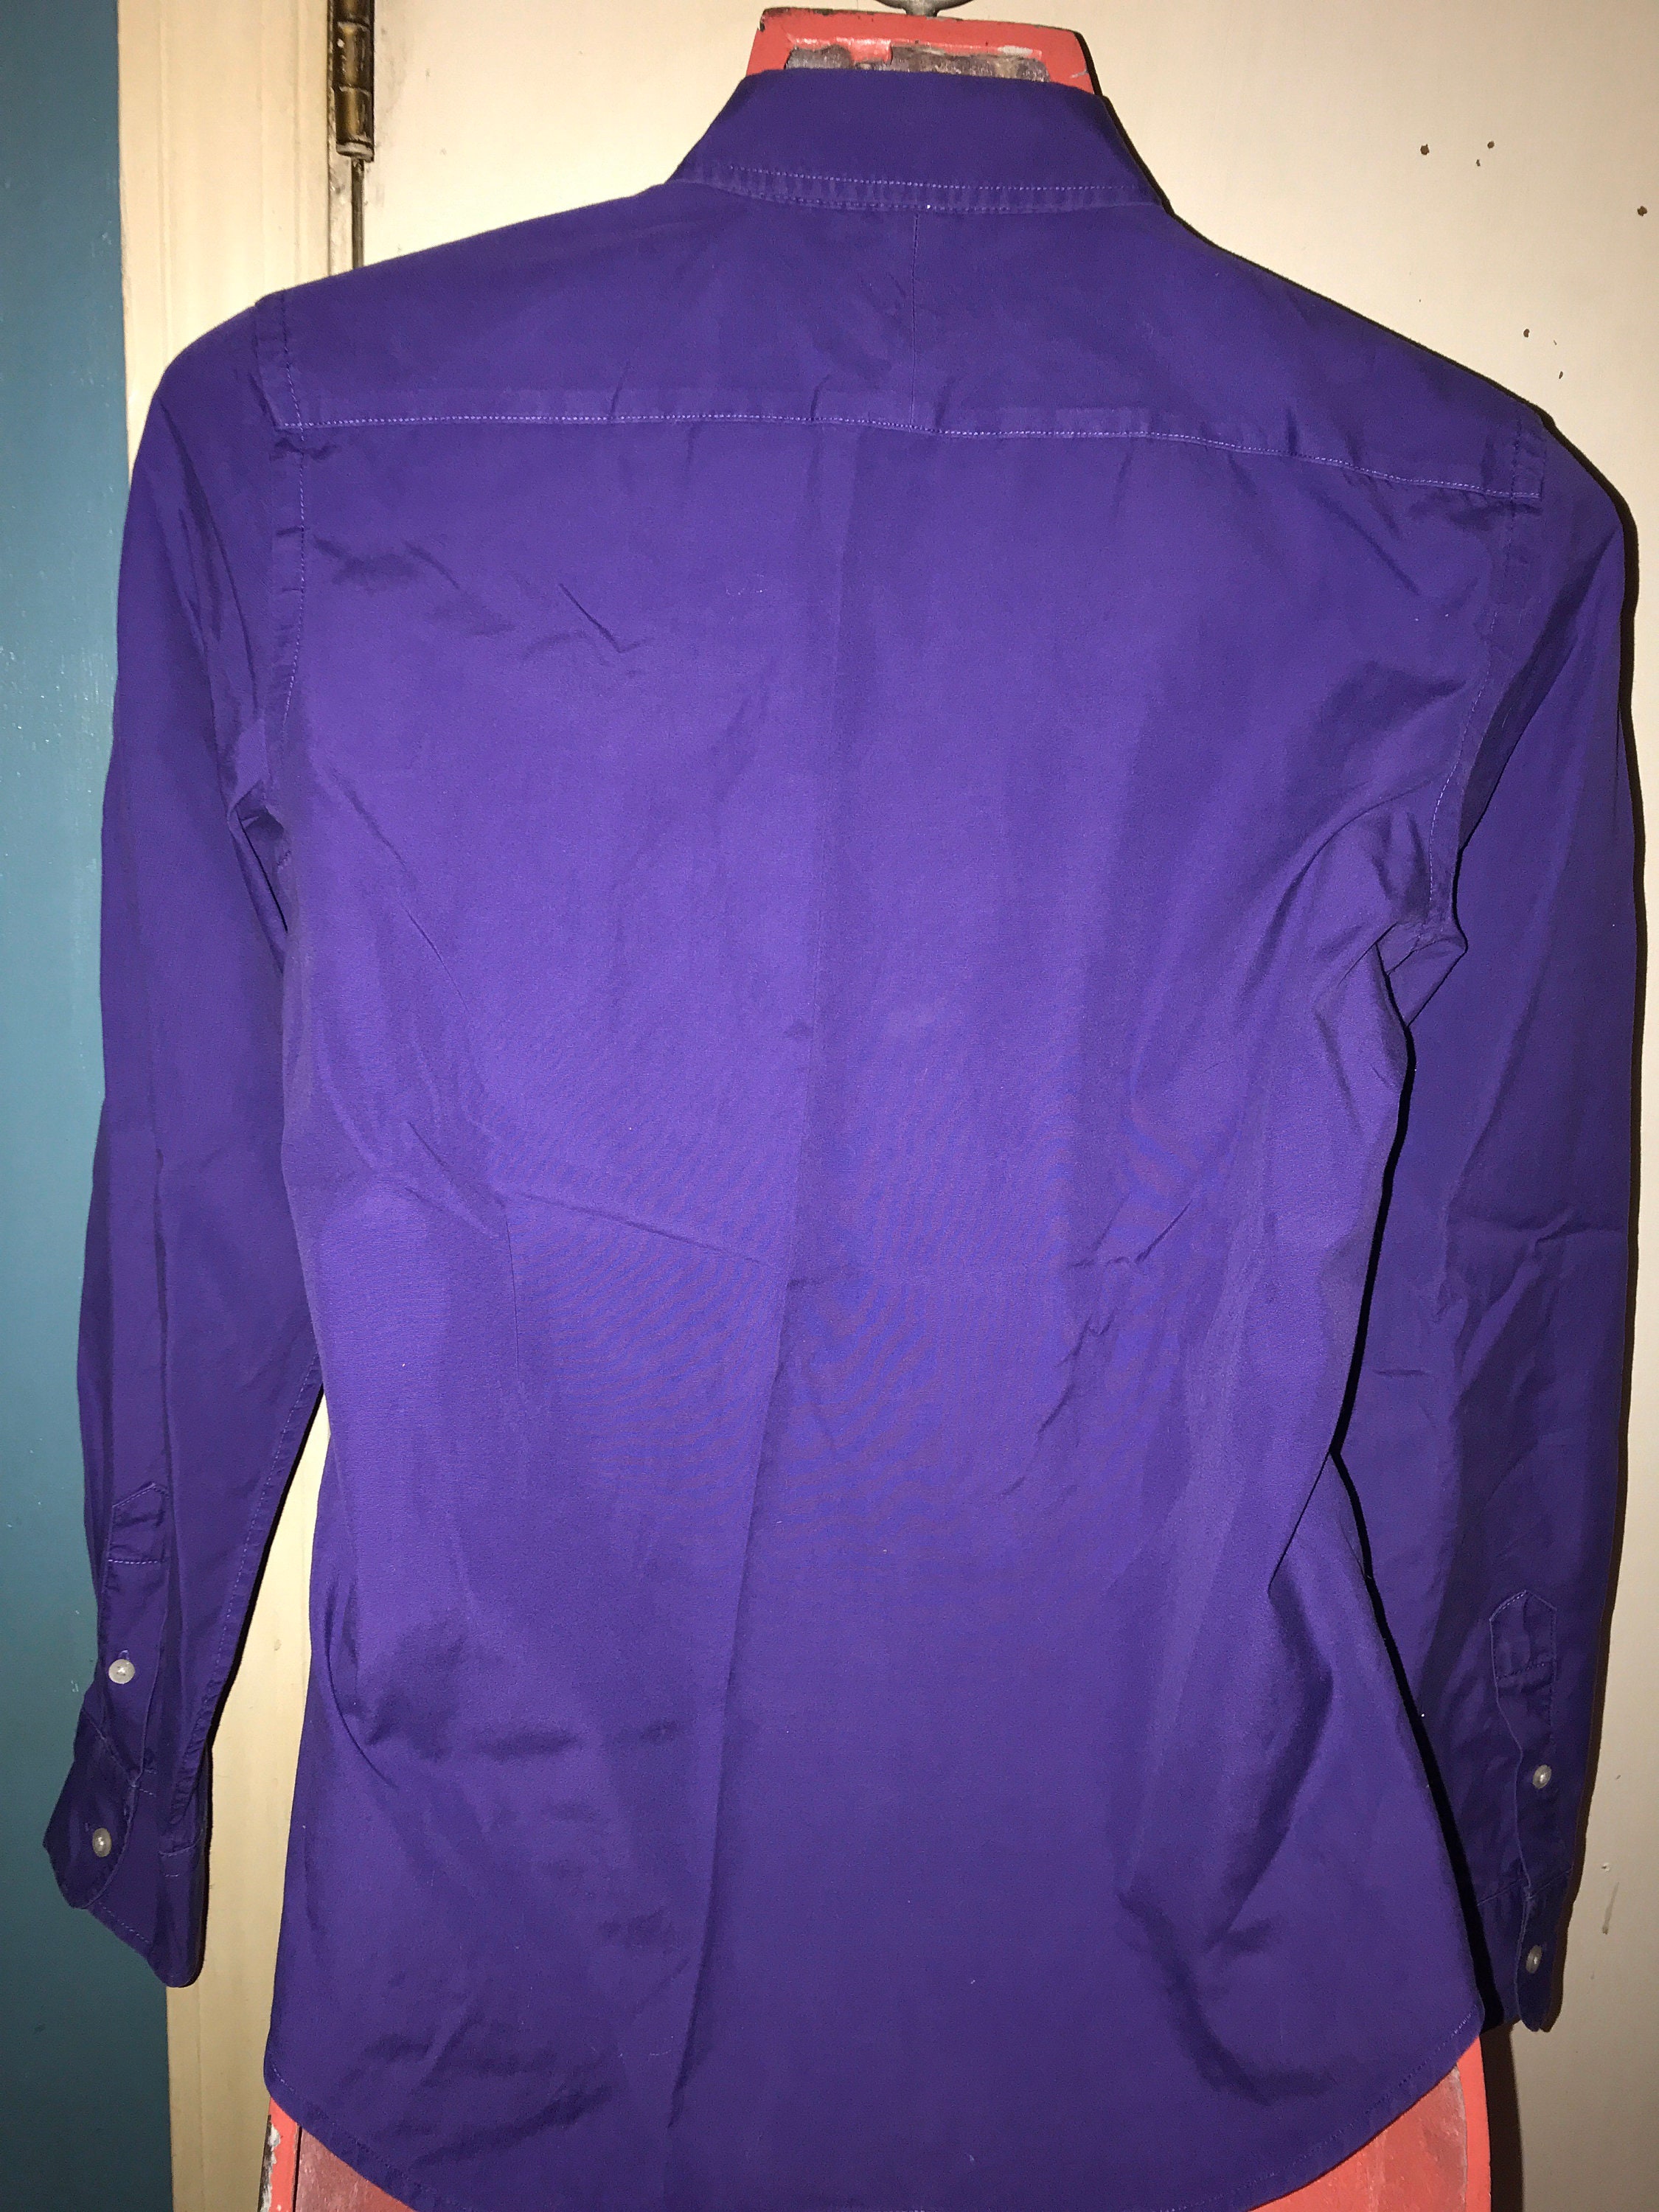 Vintage Purple Ralph Lauren Button Down Shirt. Women’s Size Small